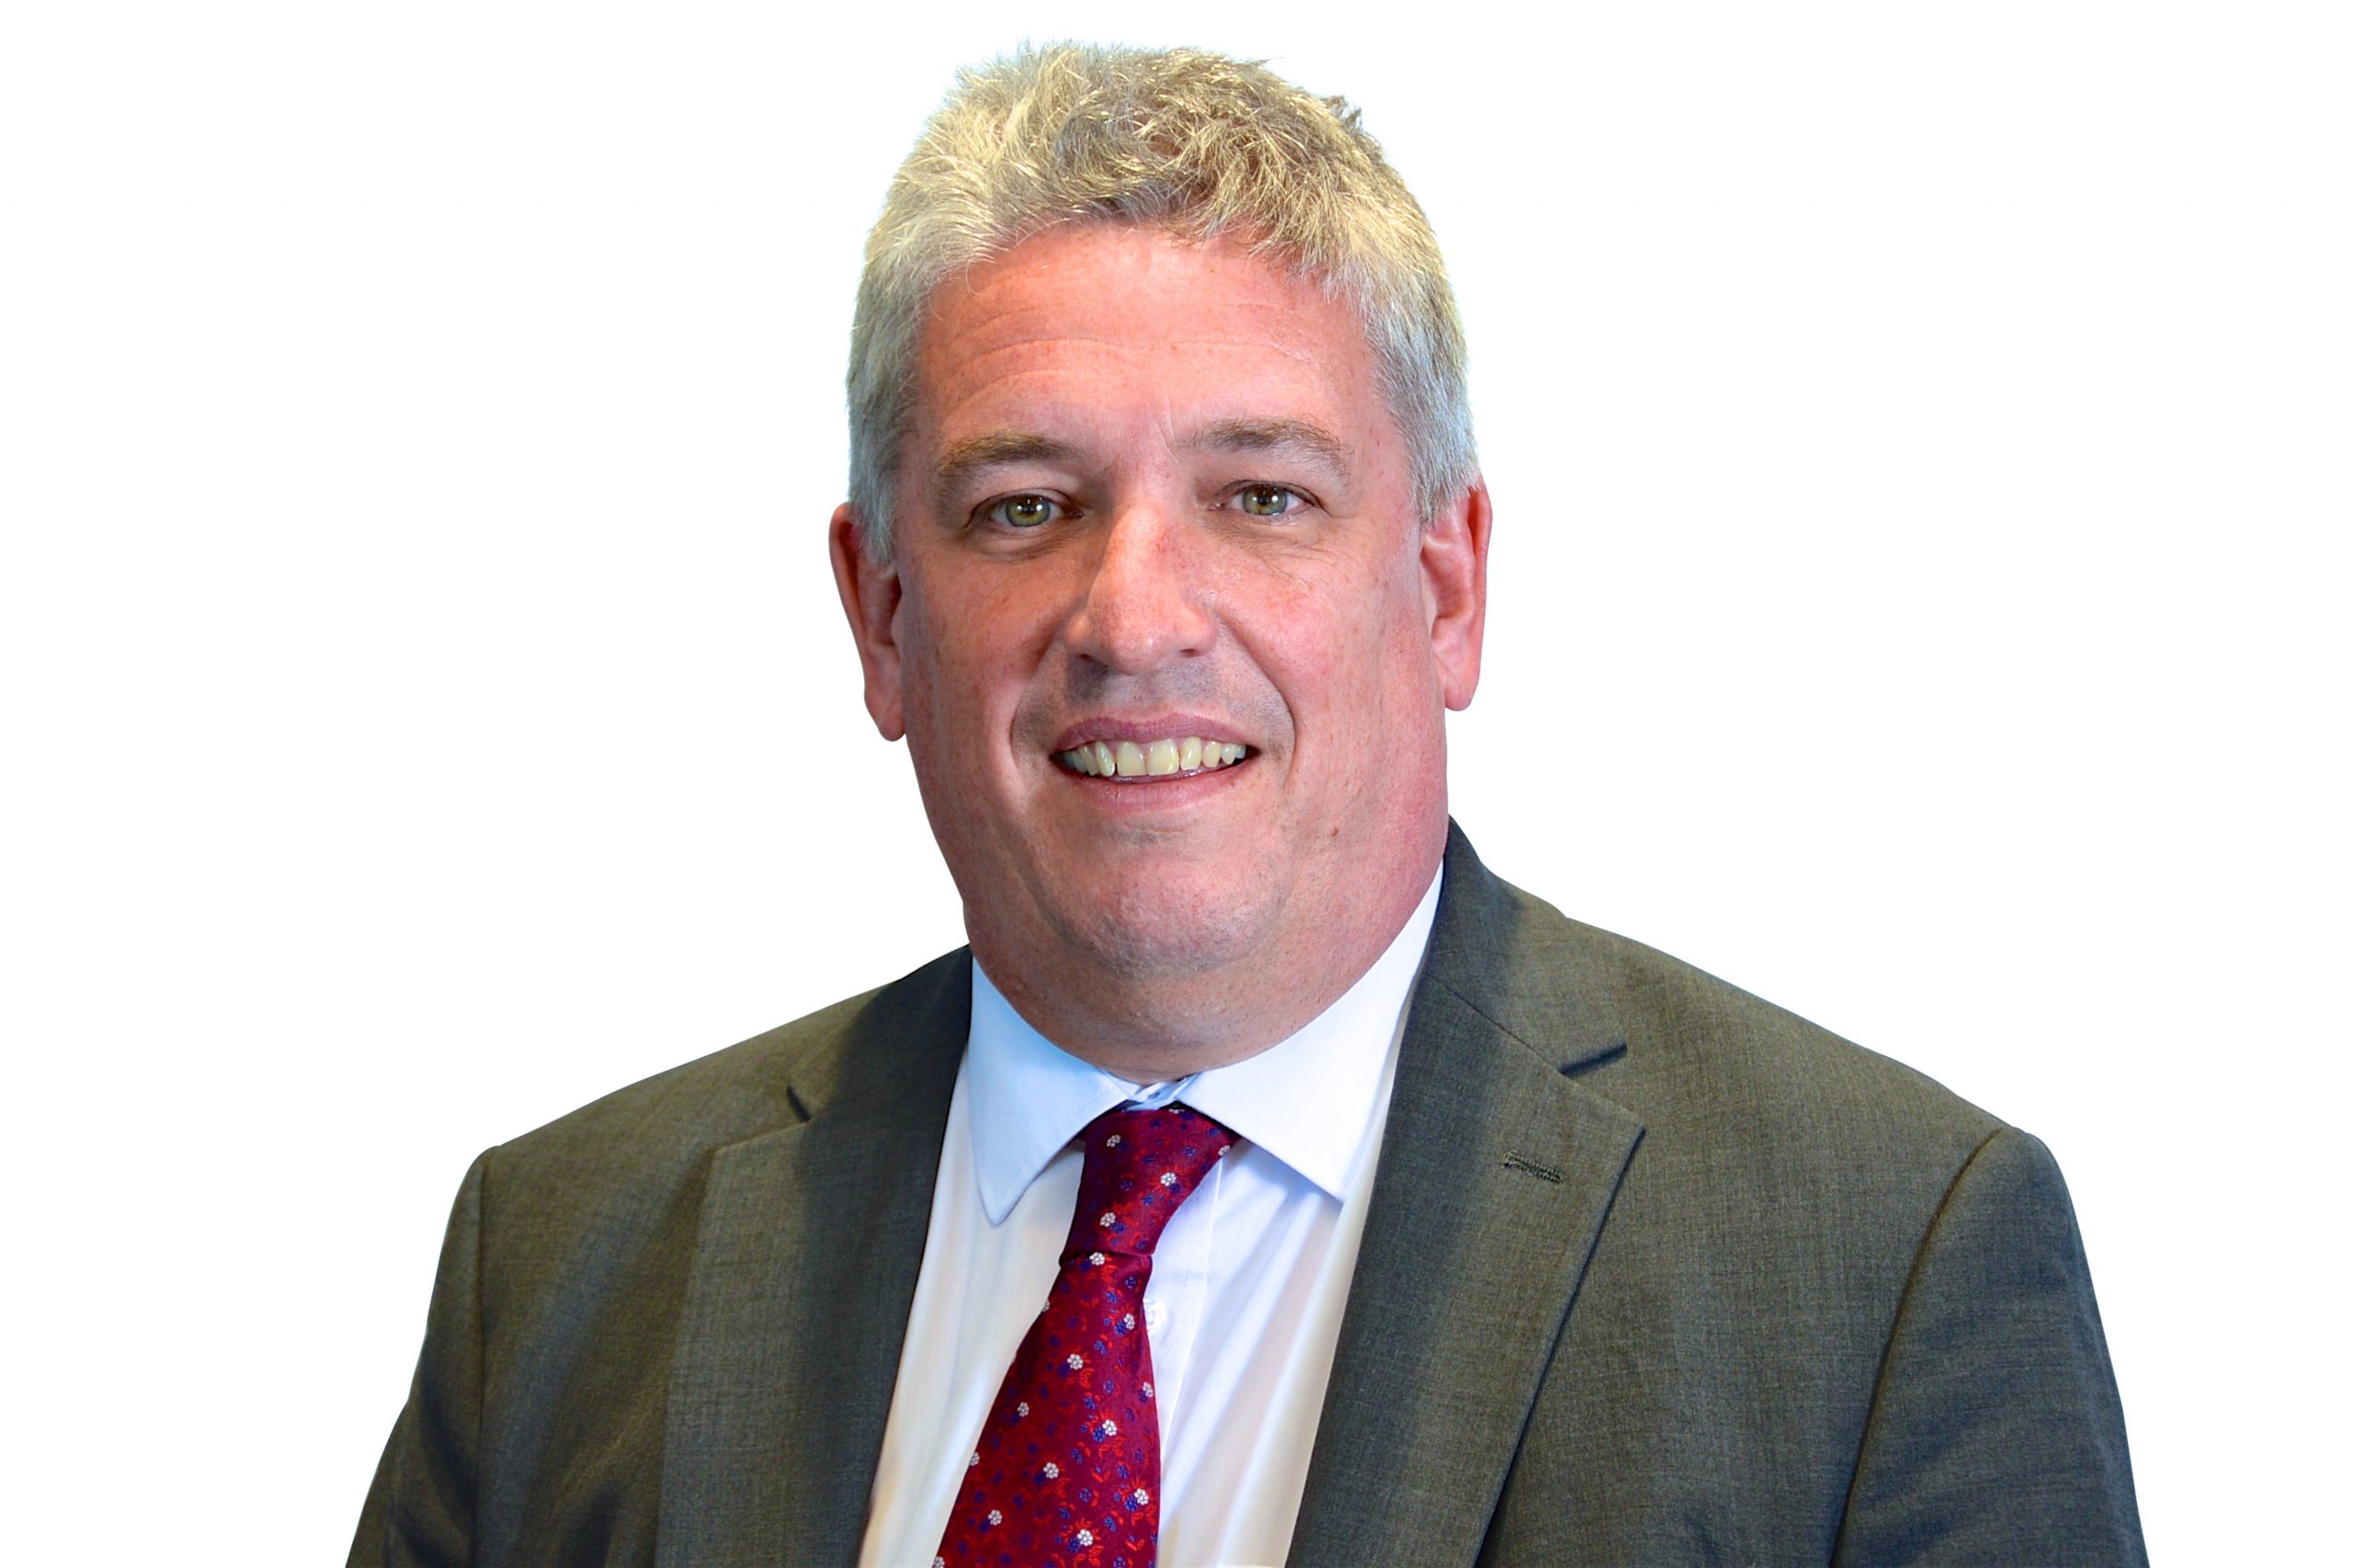 A headshot image of Focus Ireland CEO, Pat Dennigan.